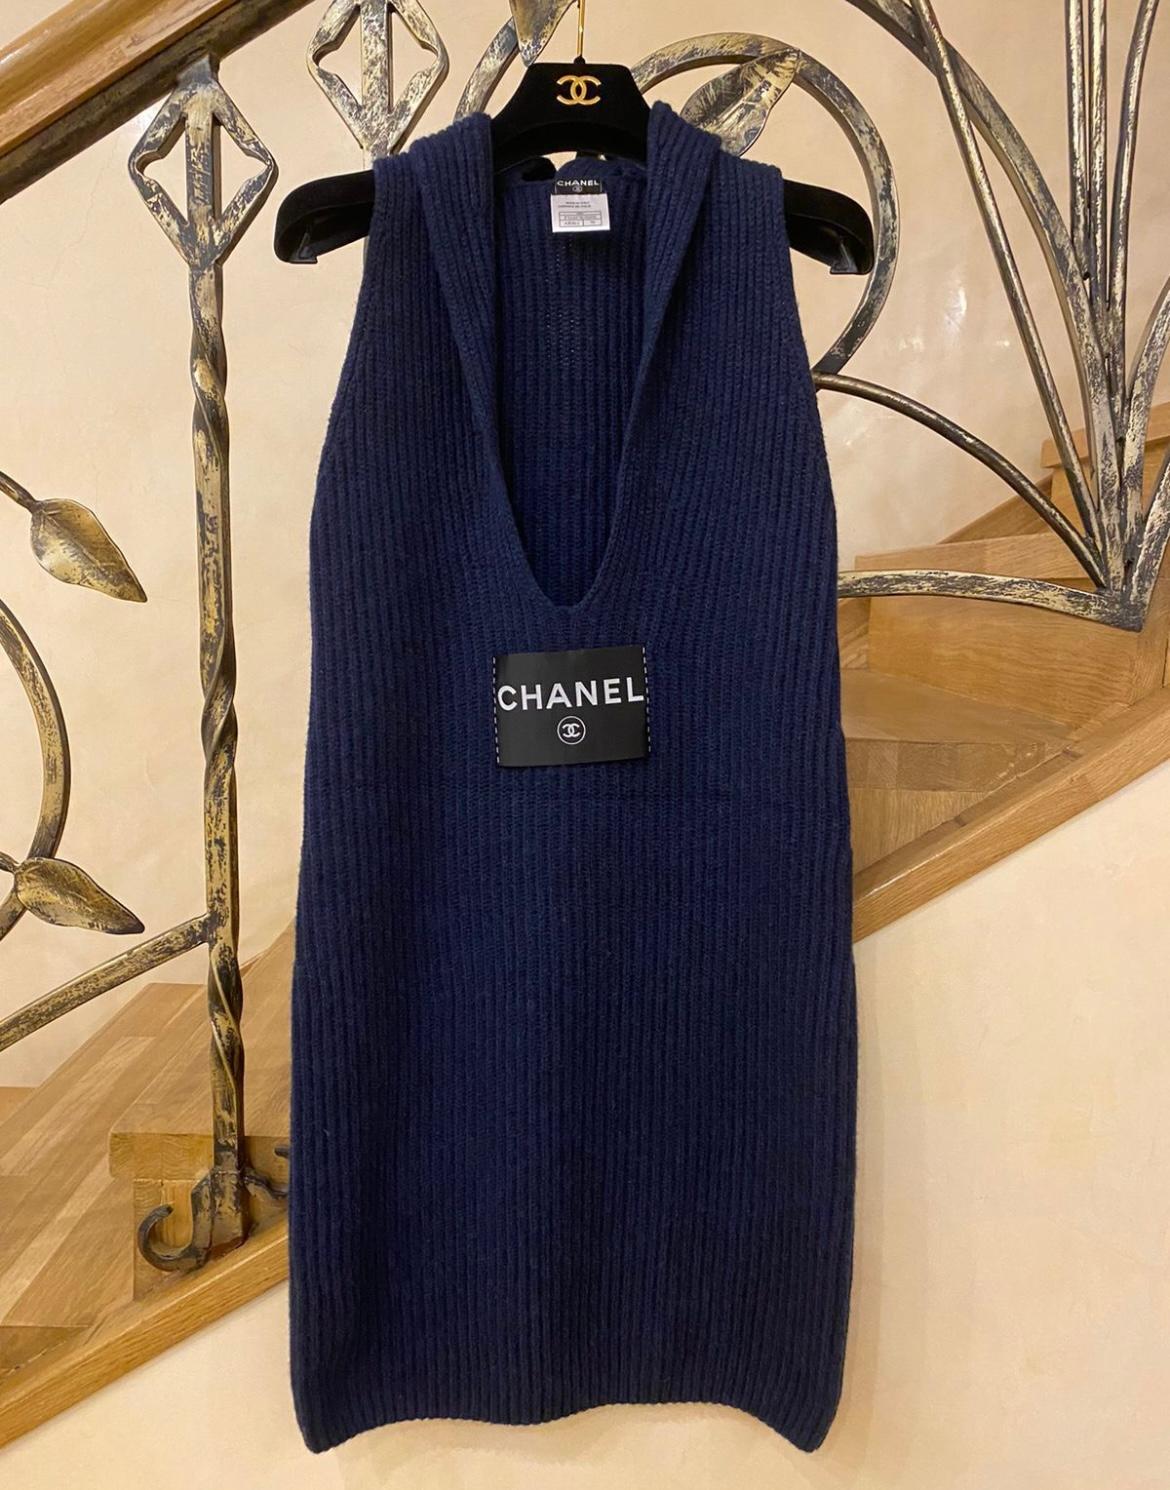 Robe Chanel bleu marine, taille 36. Excellent état.